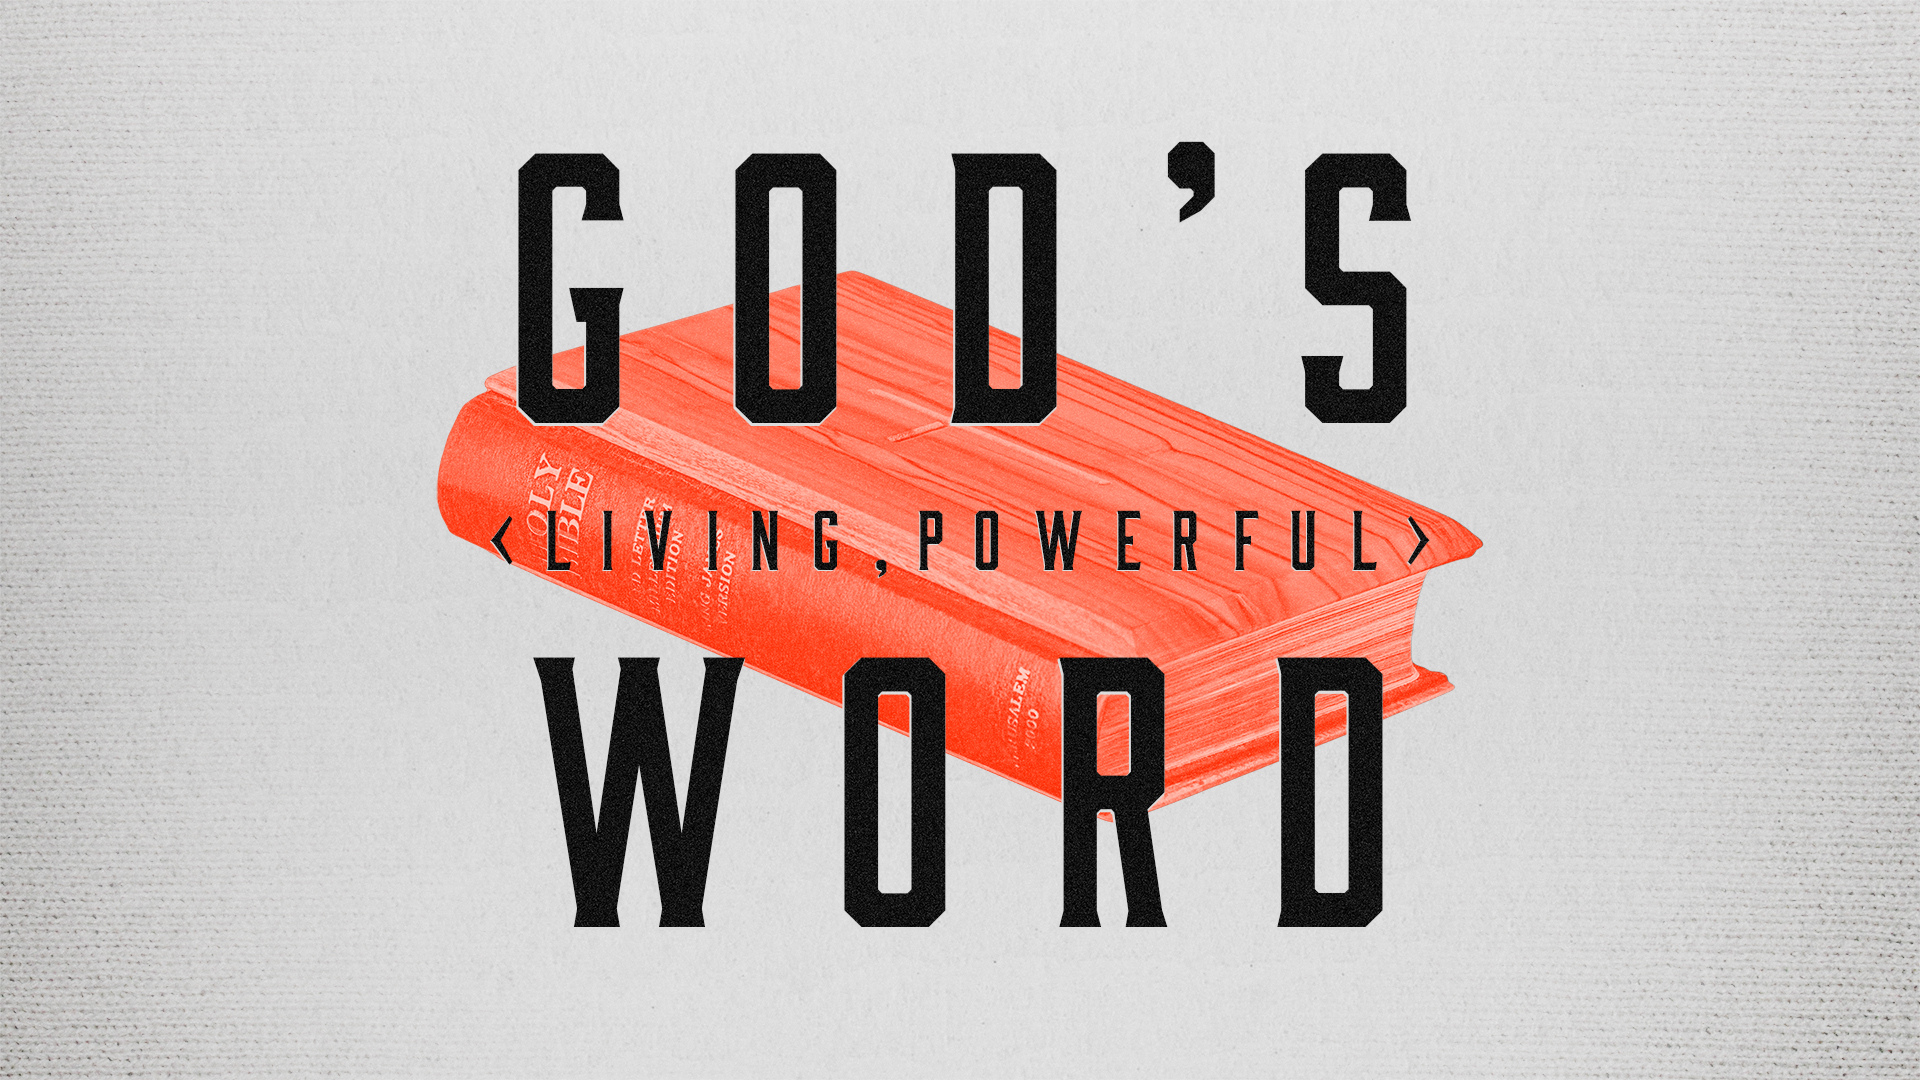 God's Living, Powerful Word